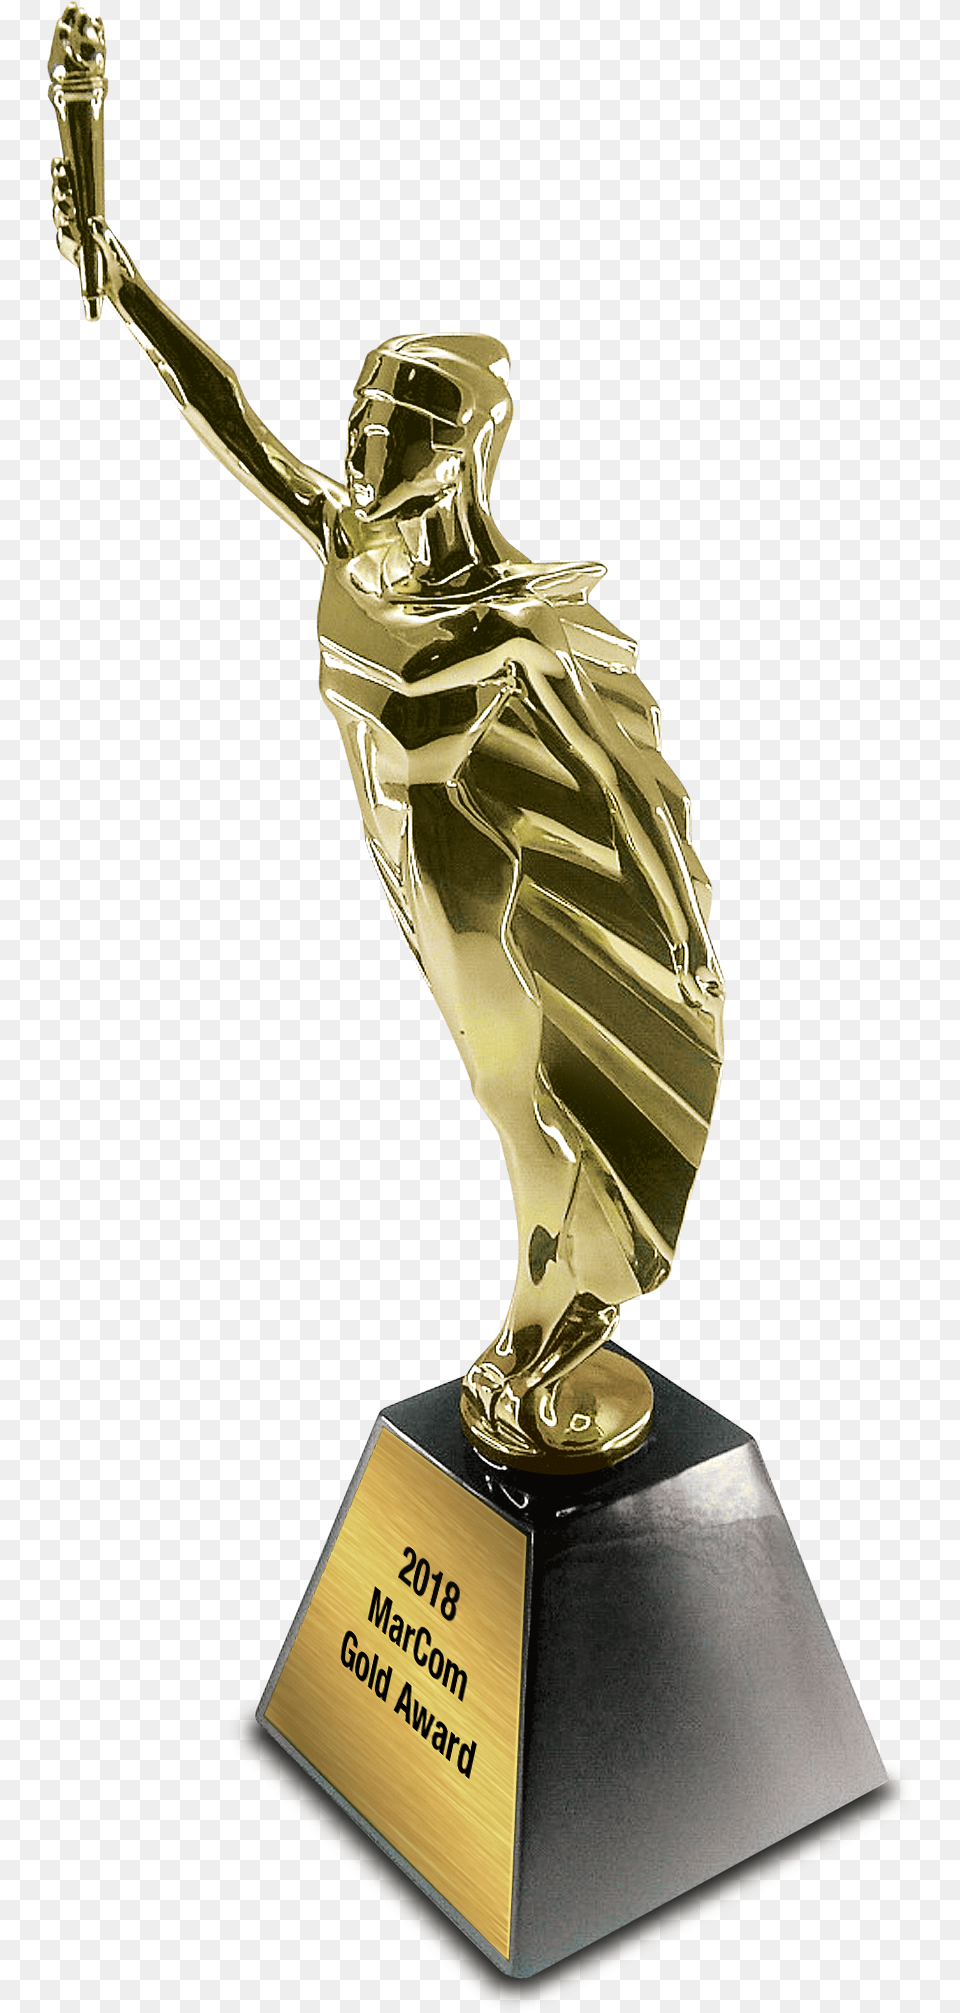 Gold Award Statuette Jpeg Marcom Award Gold 2015, Trophy, Adult, Female, Person Png Image